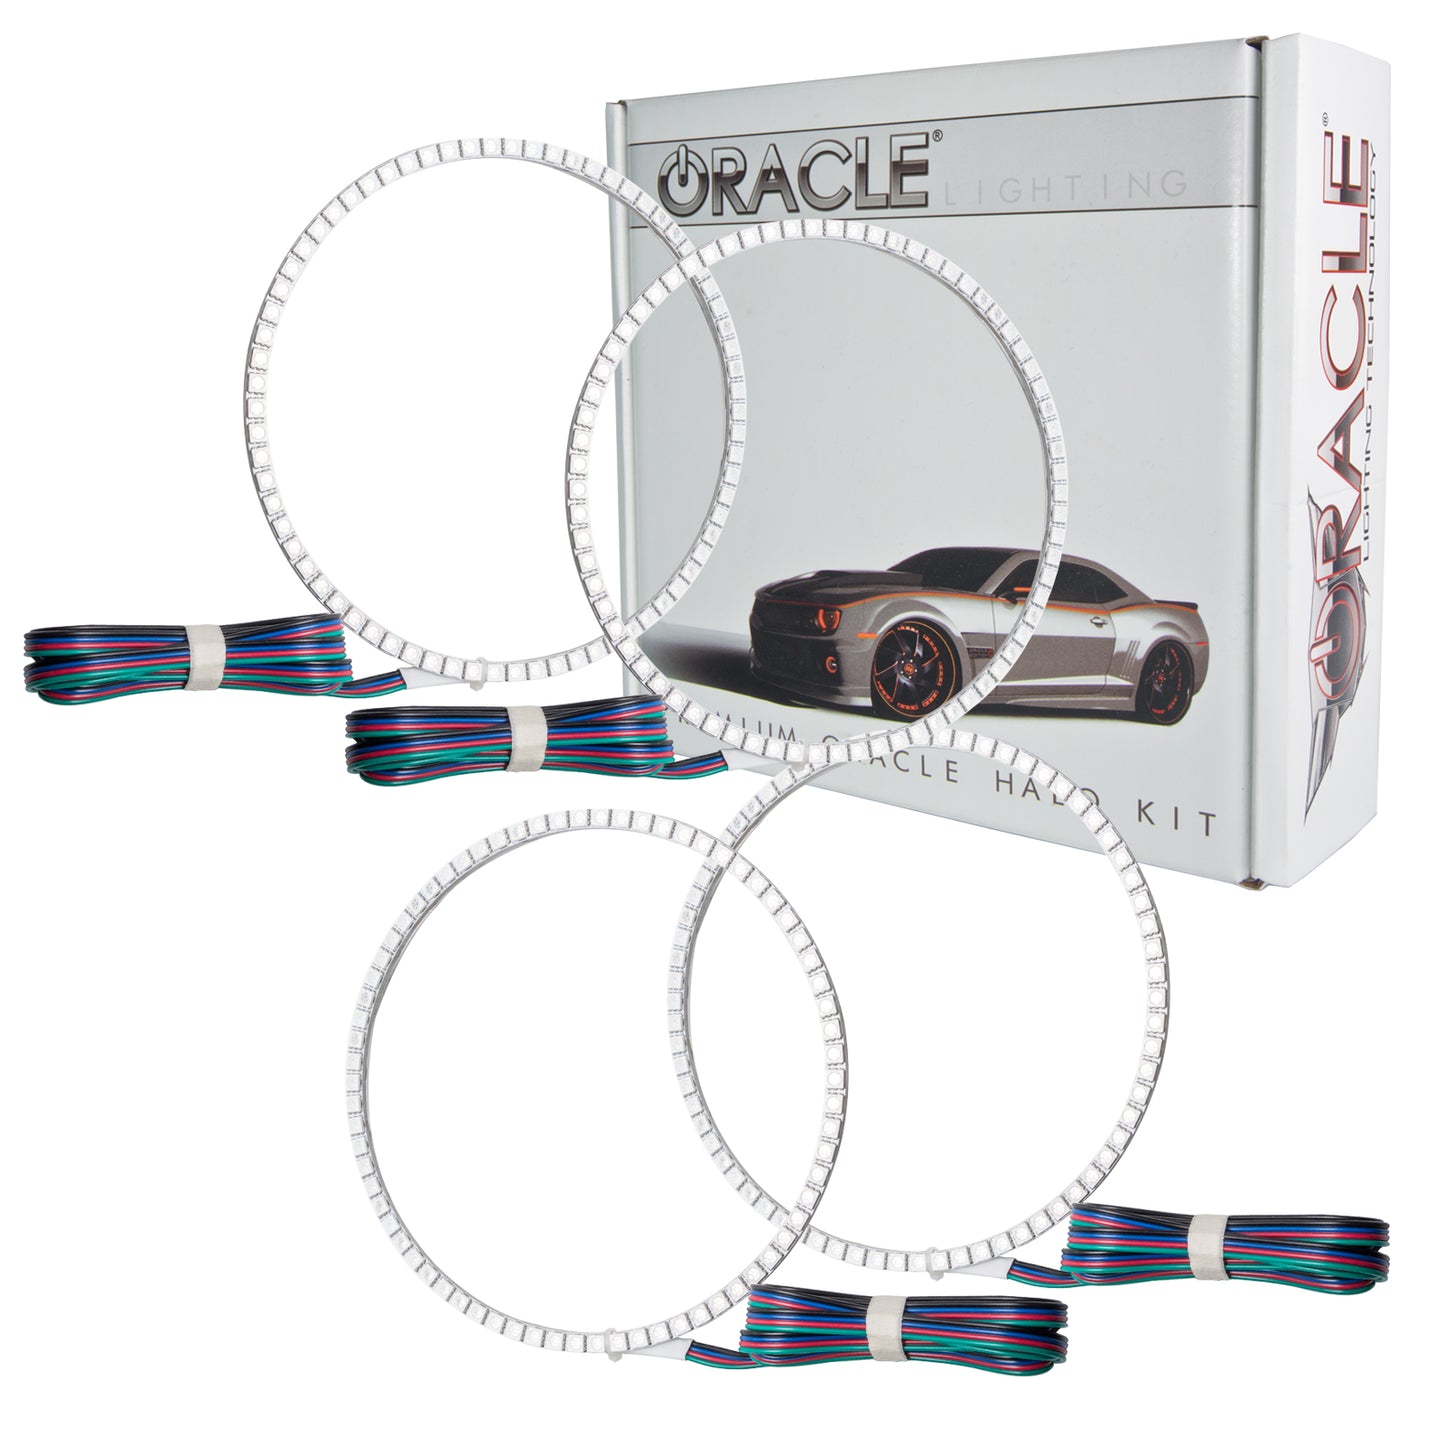 Oracle Lighting 2401-333 - Lexus LS 400 1998-2000 ORACLE ColorSHIFT Halo Kit